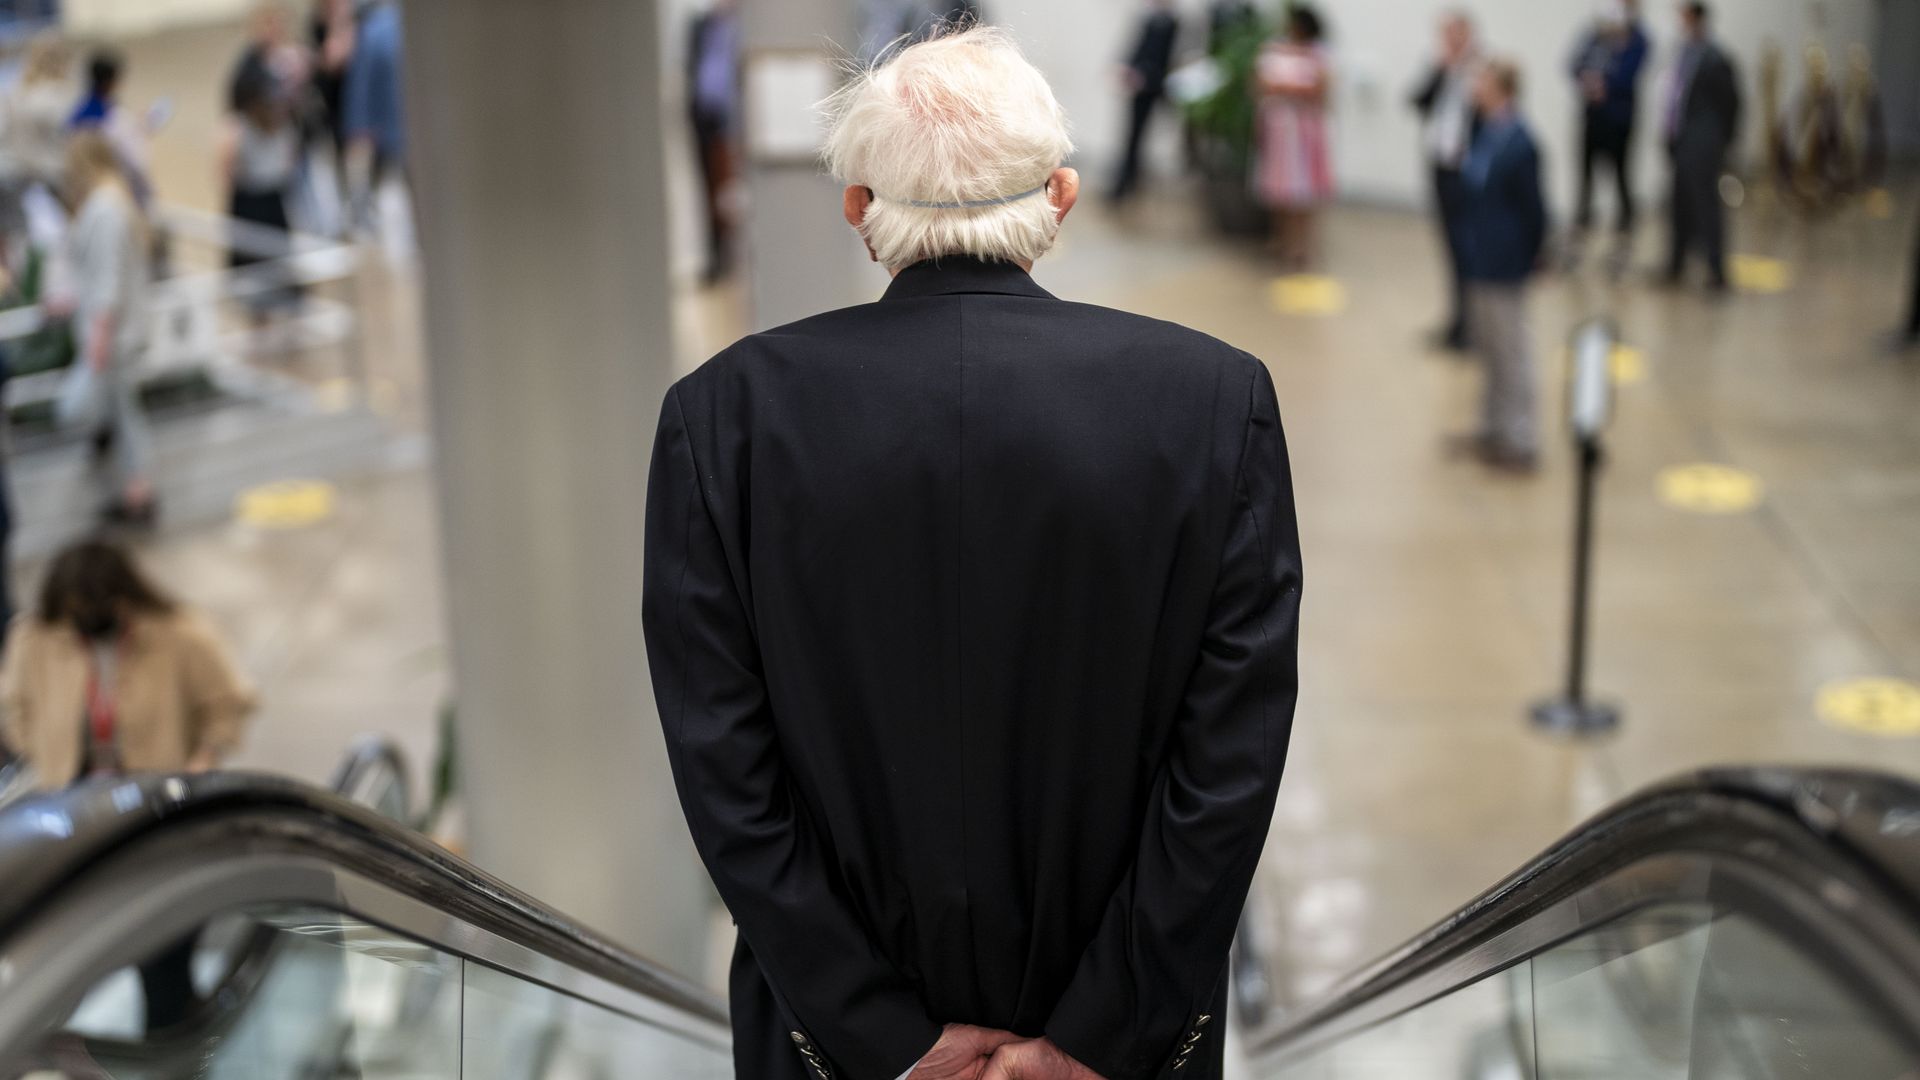 Sen. Bernie Sanders is seen descending on a Senate escalator.